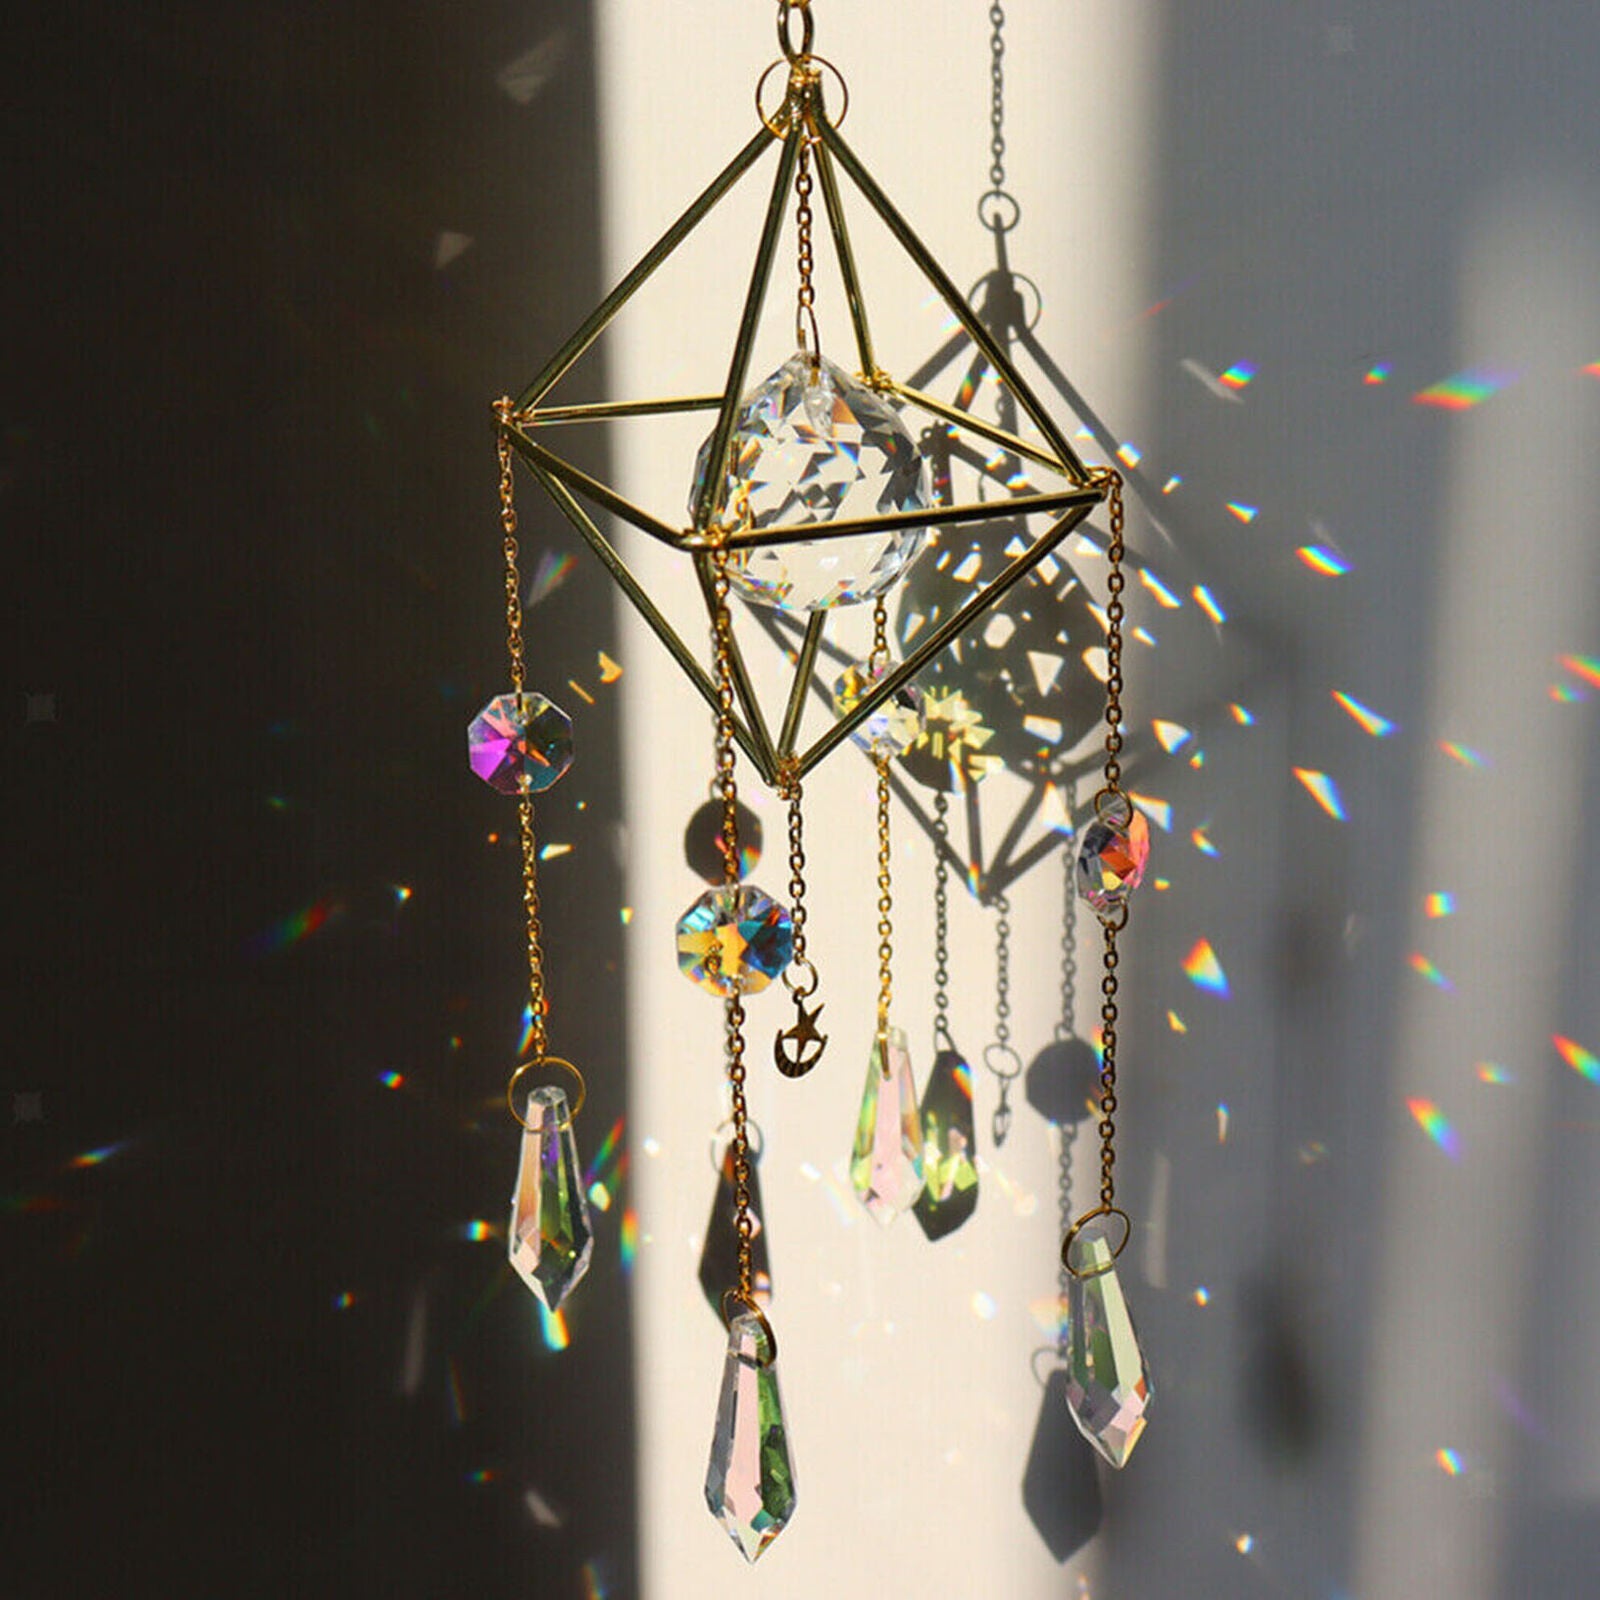 Natural Crystal Suncatcher Rainbow Catcher Hanging Prism Home Decor Art Window